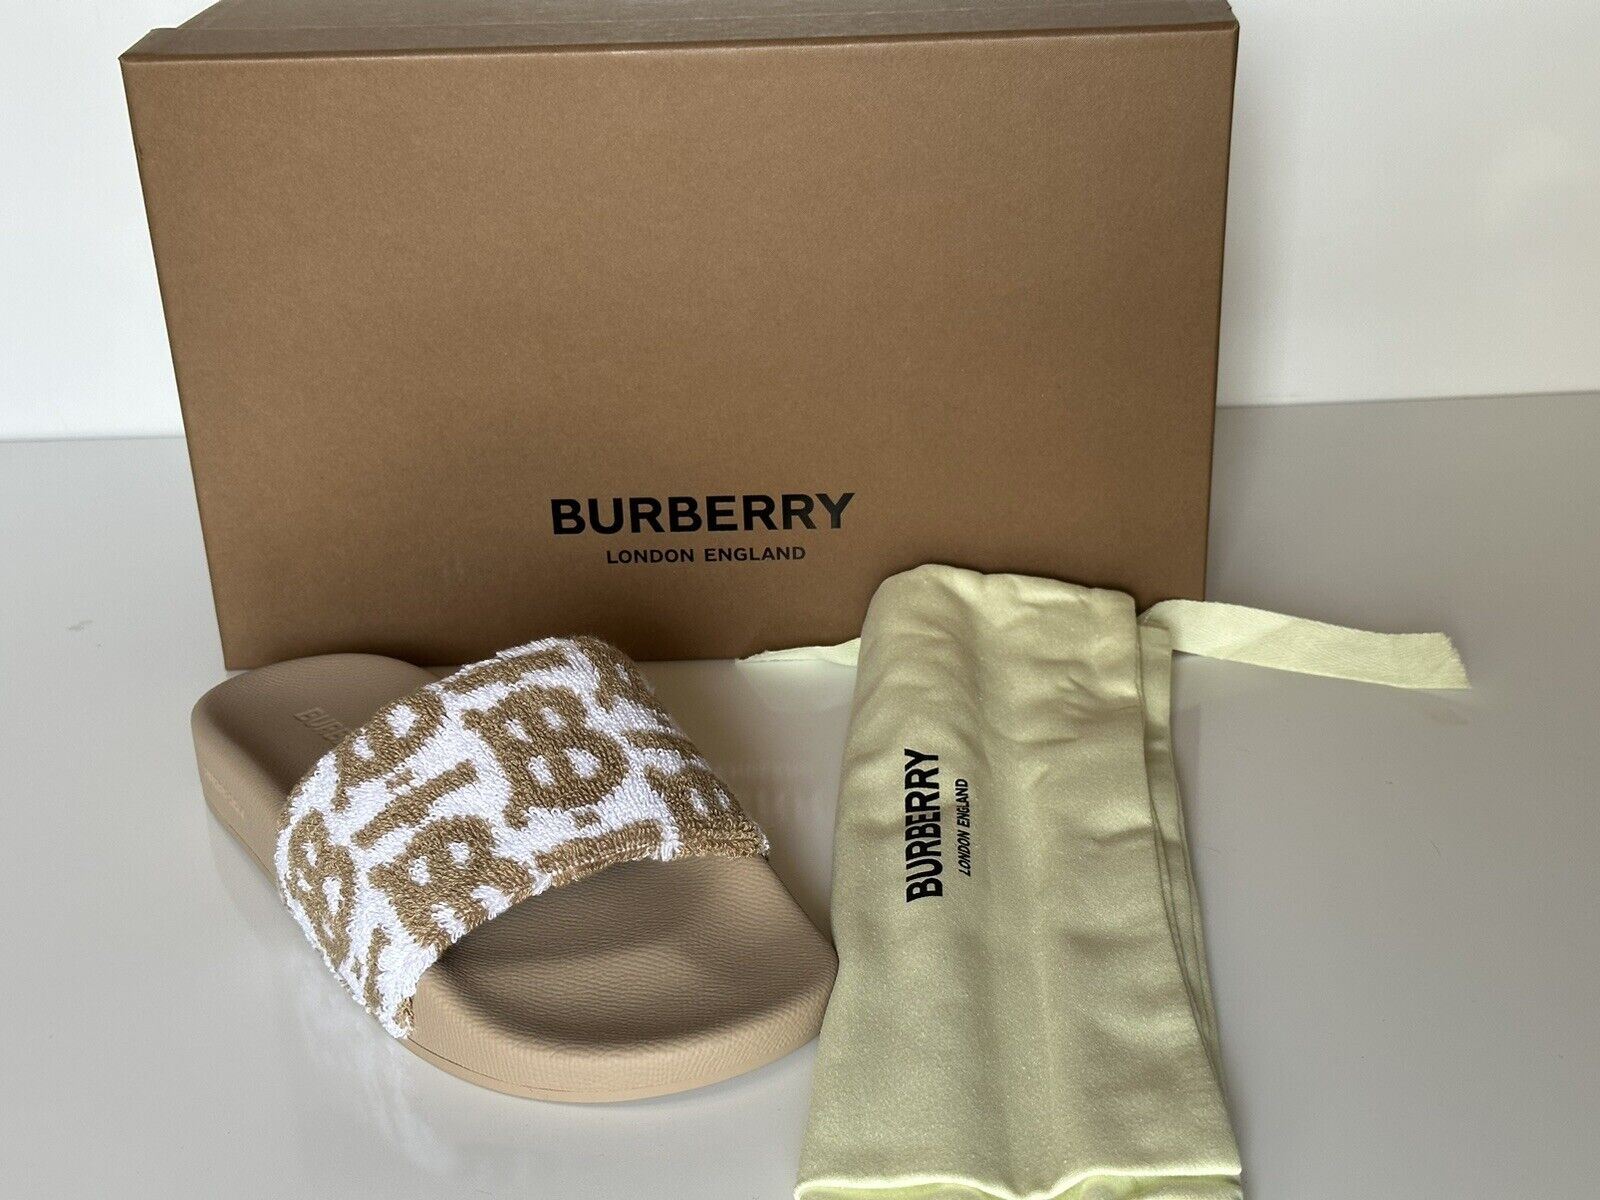 NIB $490 Burberry Furley Womens TB Beige/White Slides Sandals 11 US (41) 8056745